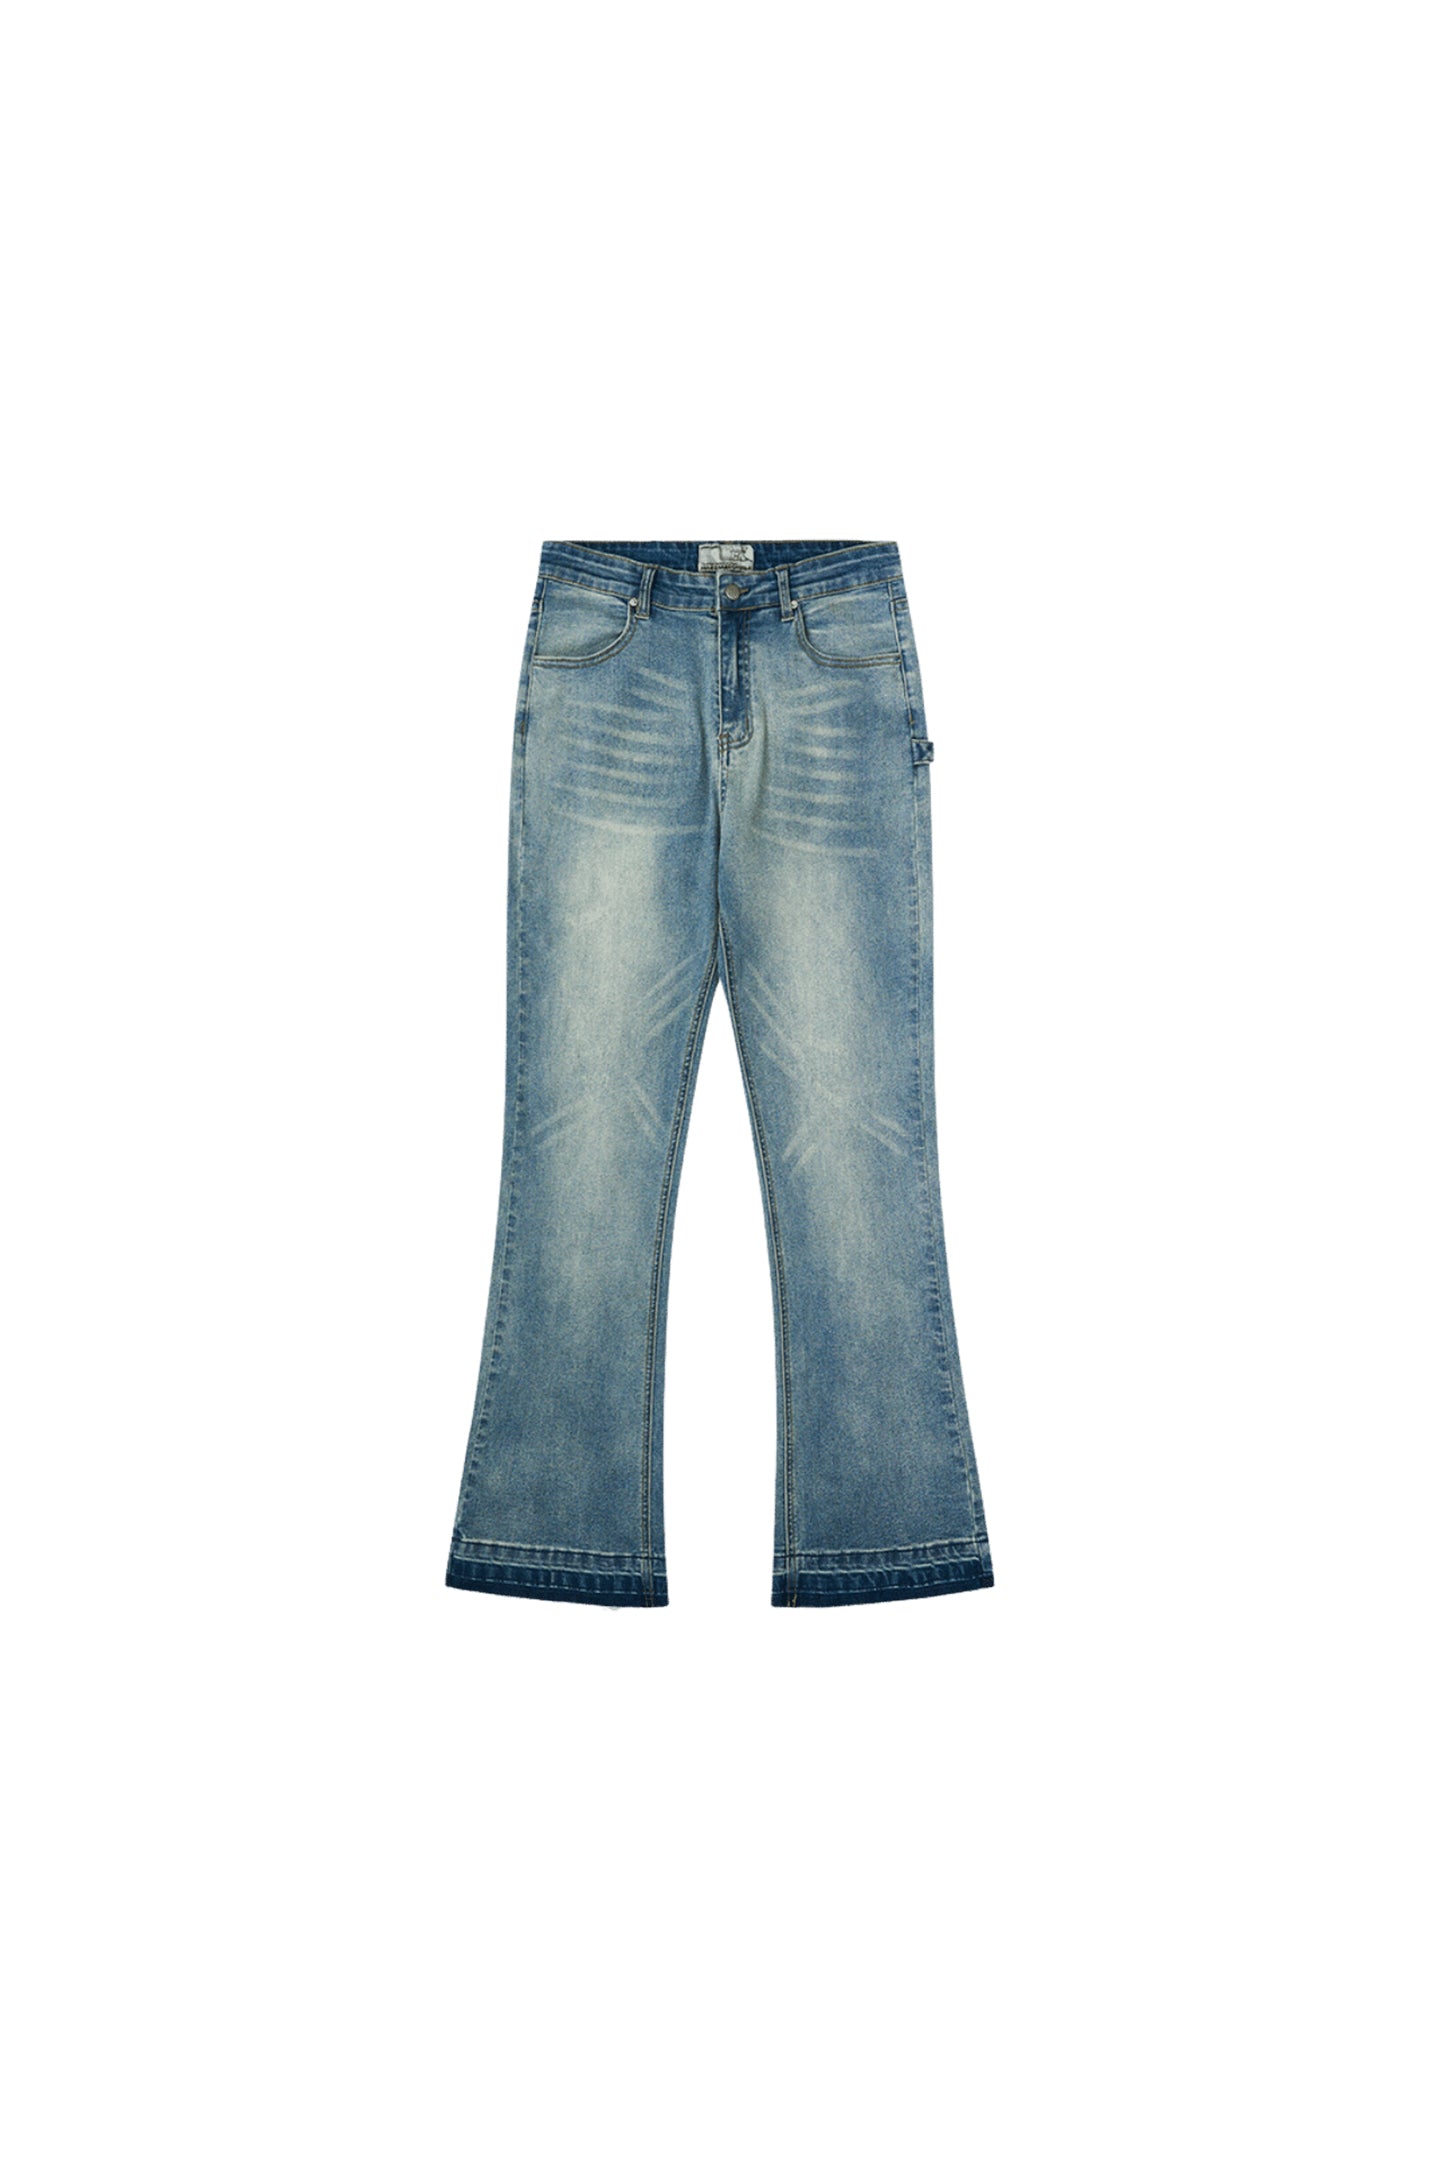 Distressed Vintage Washed Flared Jeans